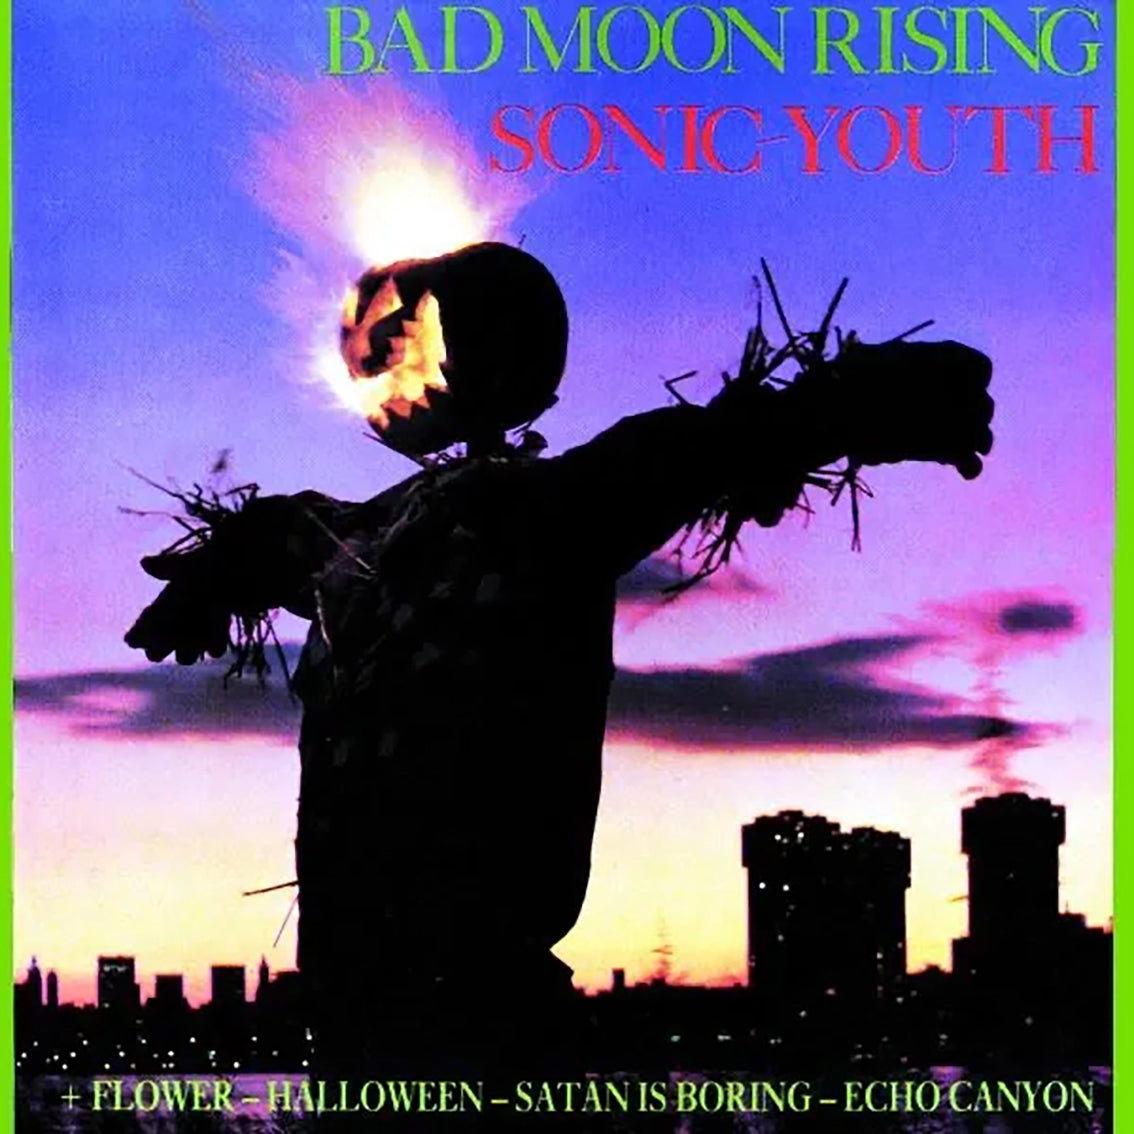 Sonic Youth - Bad Moon Rising